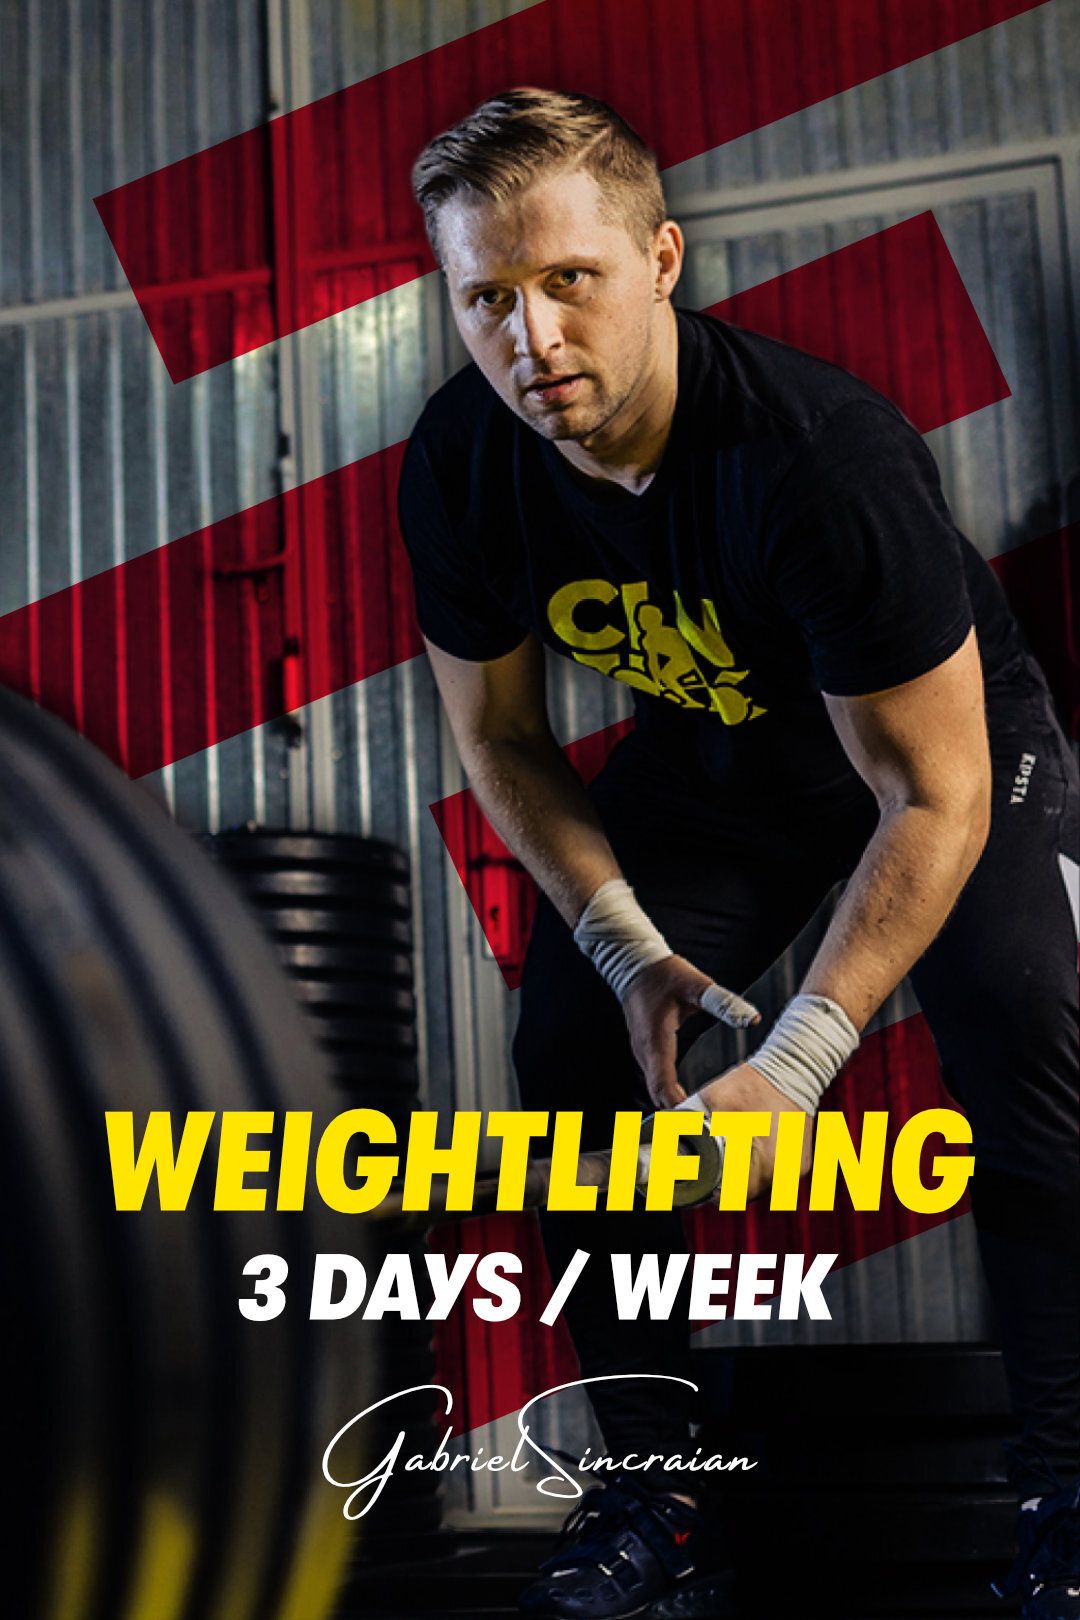 Gabriel Sîncrăian - 3 Days / Week Weightlifting